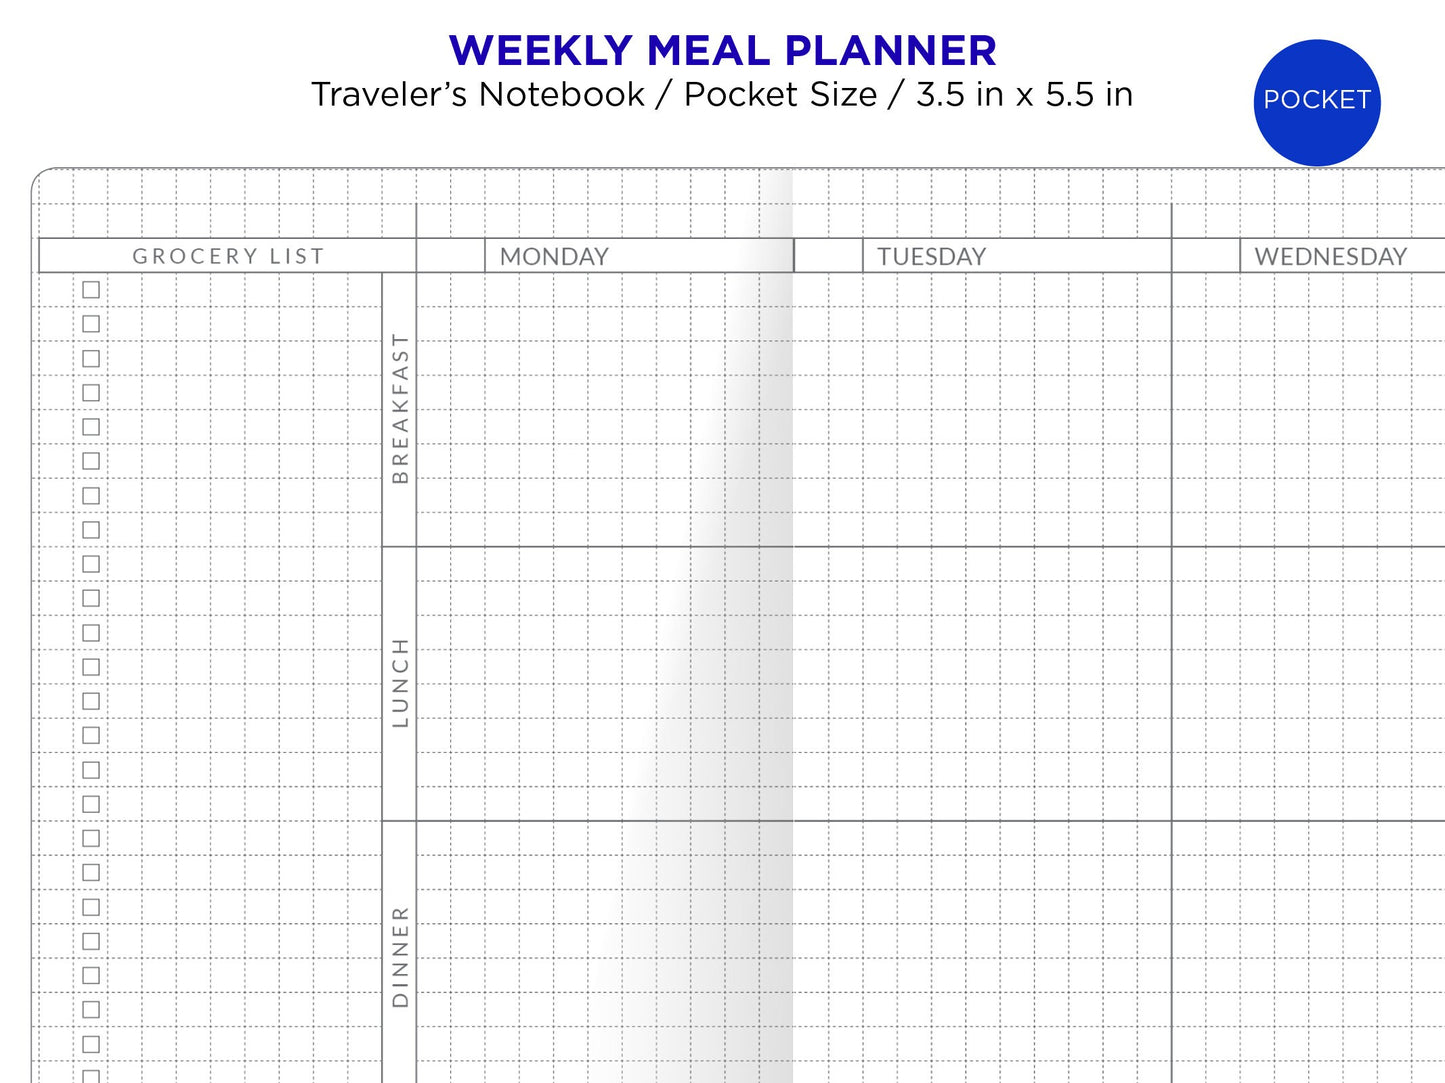 TN Pocket WEEKLY MEAL Planner Printable Traveler's Notebook Insert